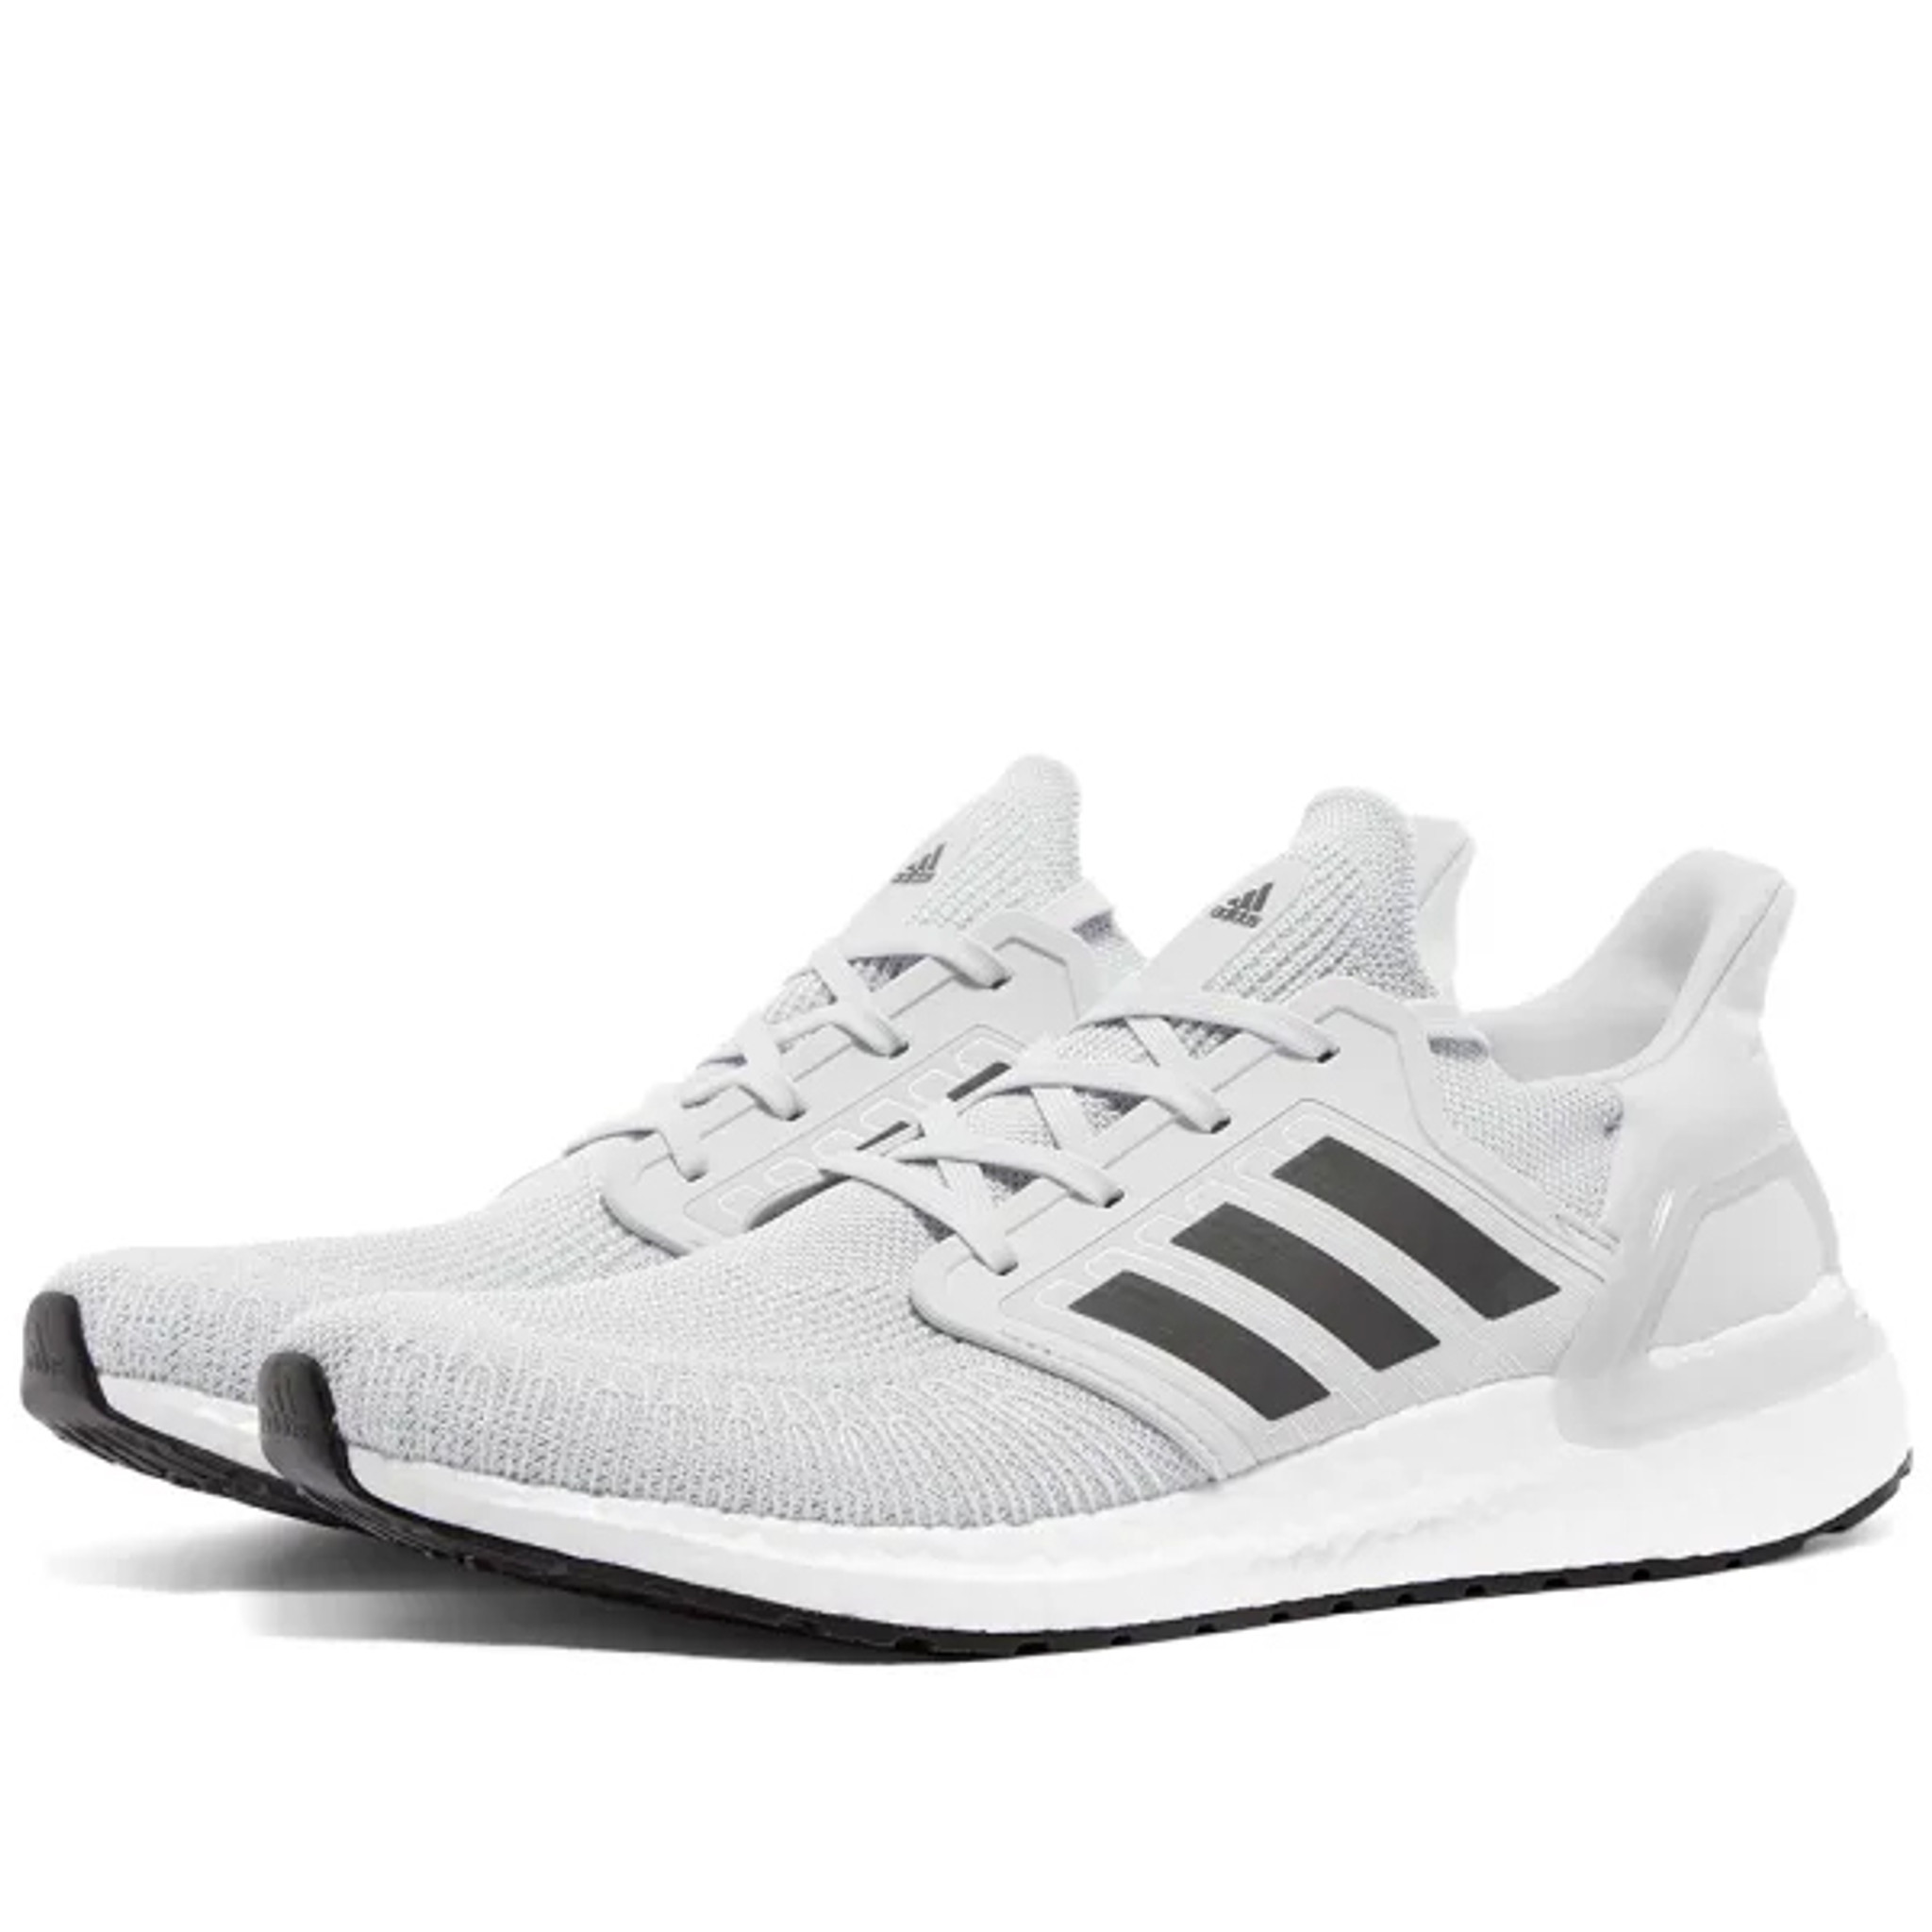 adidas ultraboost 20 grey men's running shoe